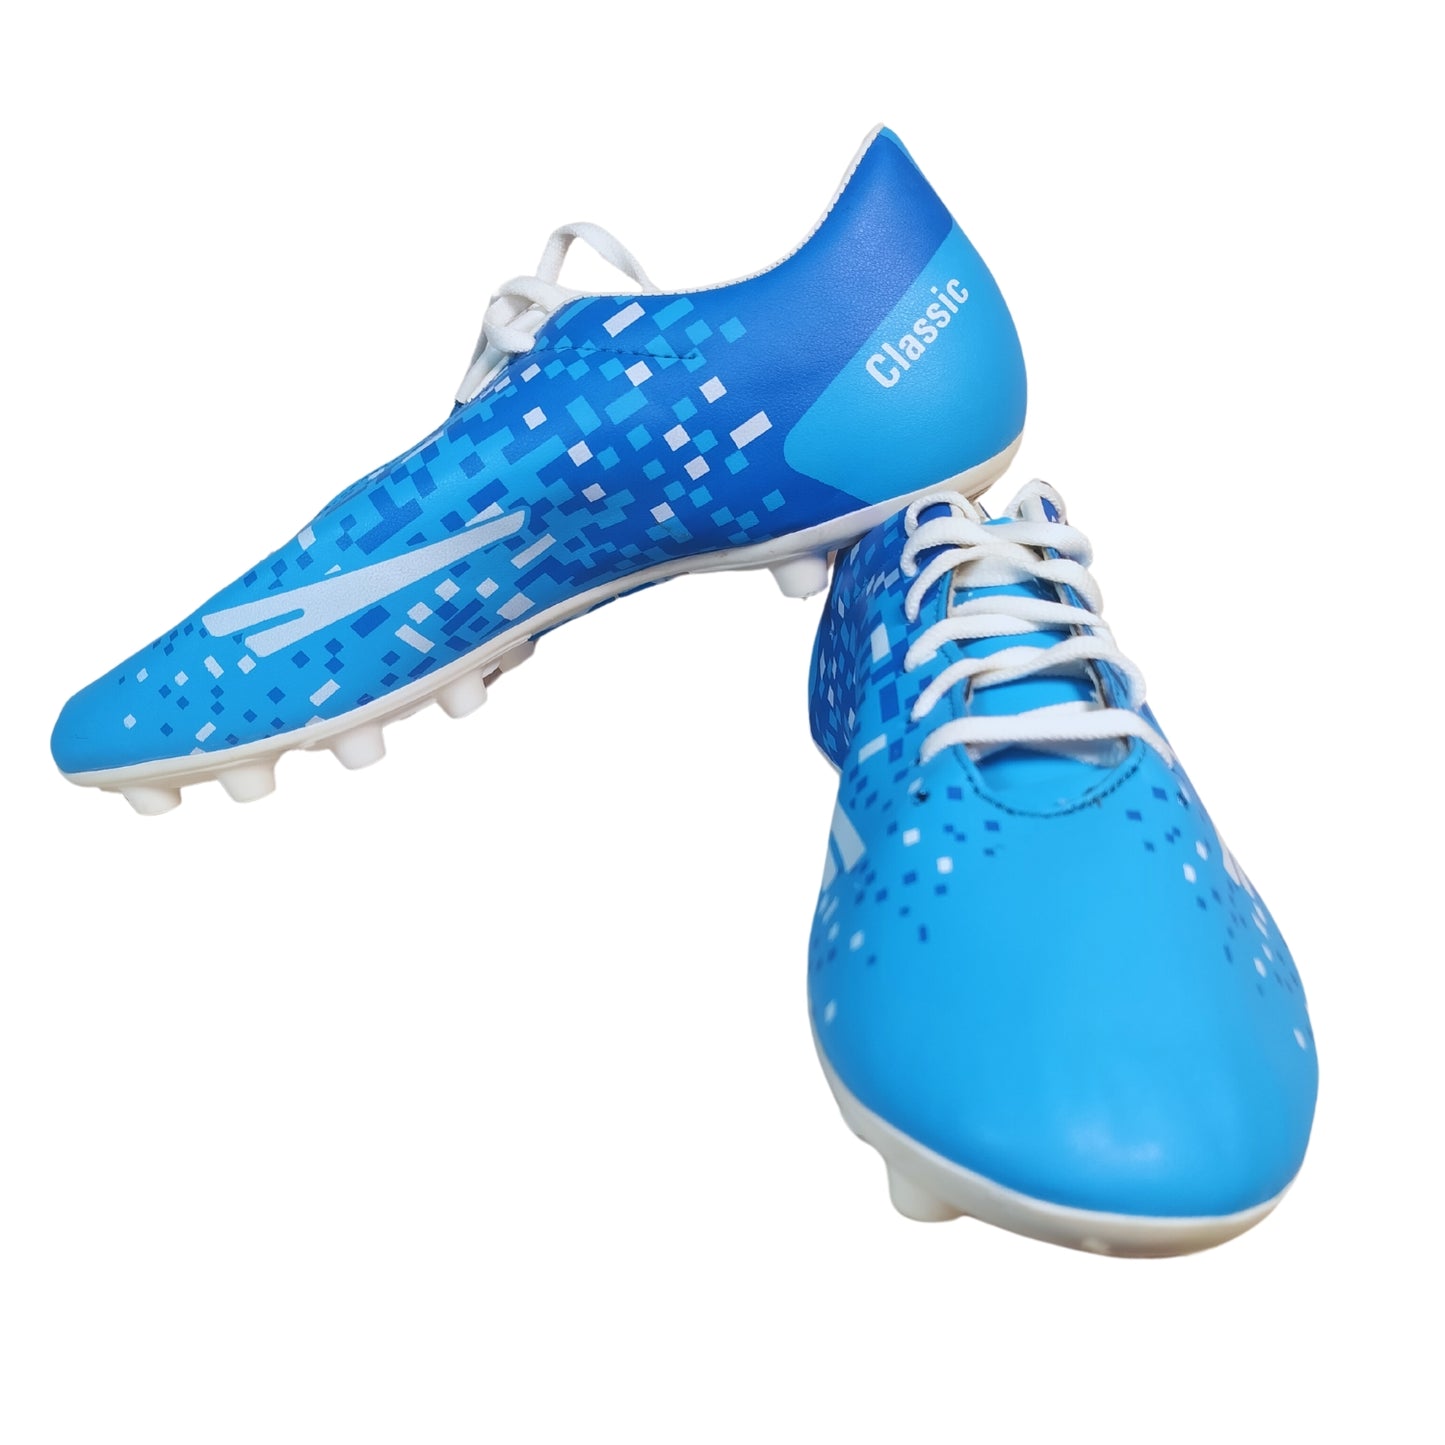 Sega Classic Football Shoes - Best Price online Prokicksports.com